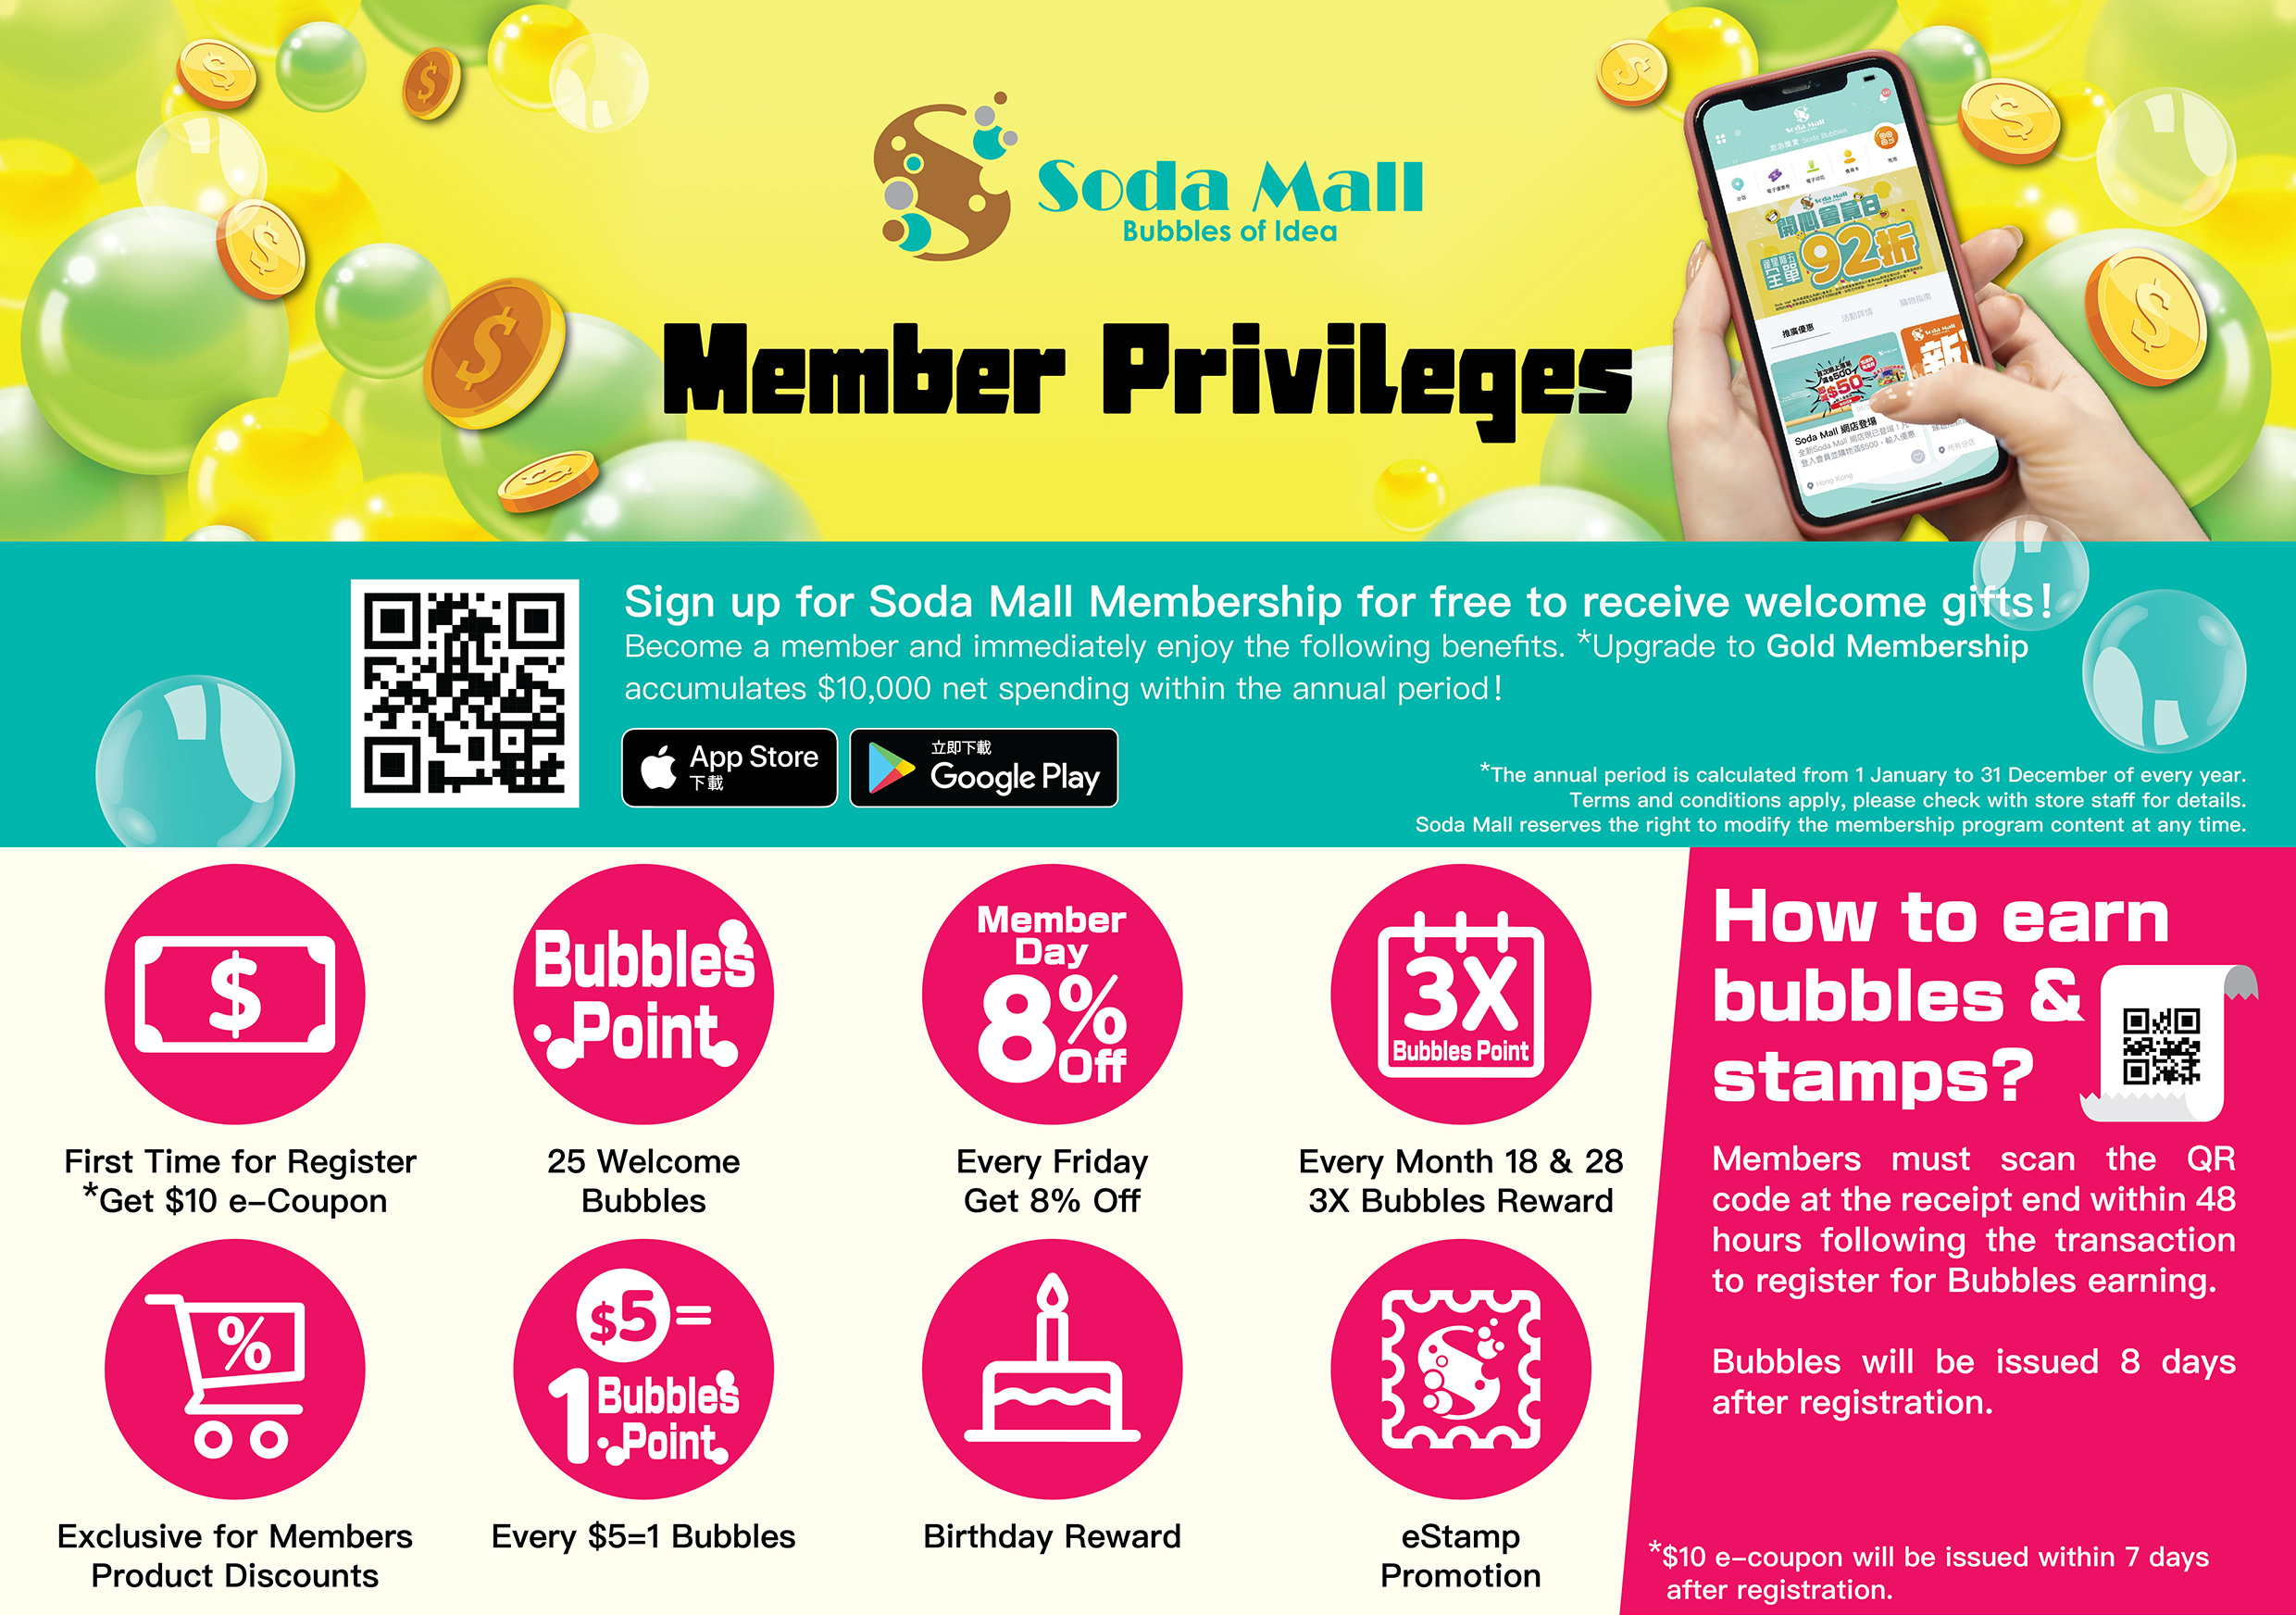 Soda Mall Member Privileges